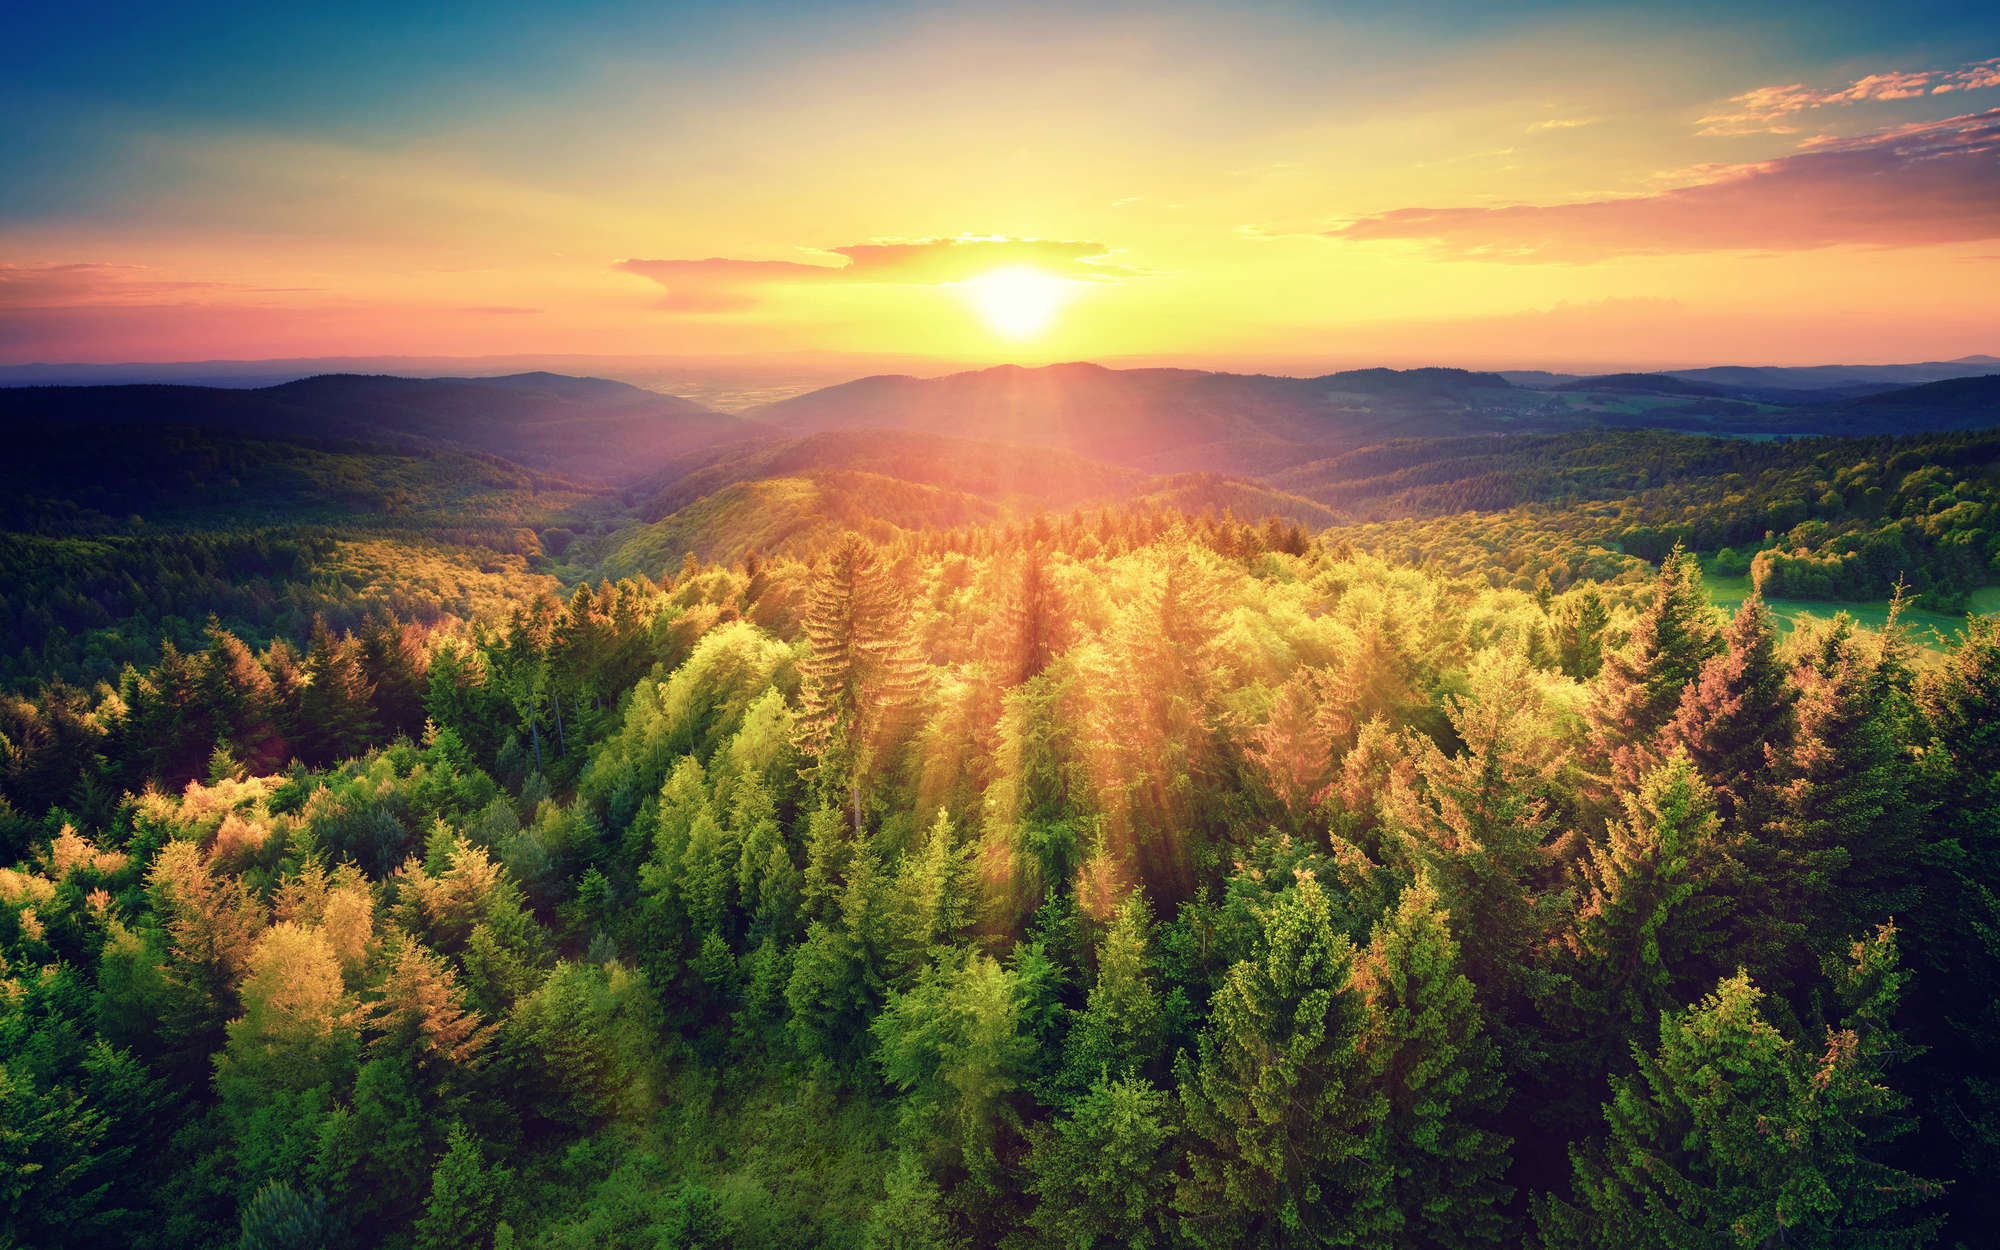             Natur Fototapete Wald im Sonnenuntergang – Perlmutt Glattvlies
        